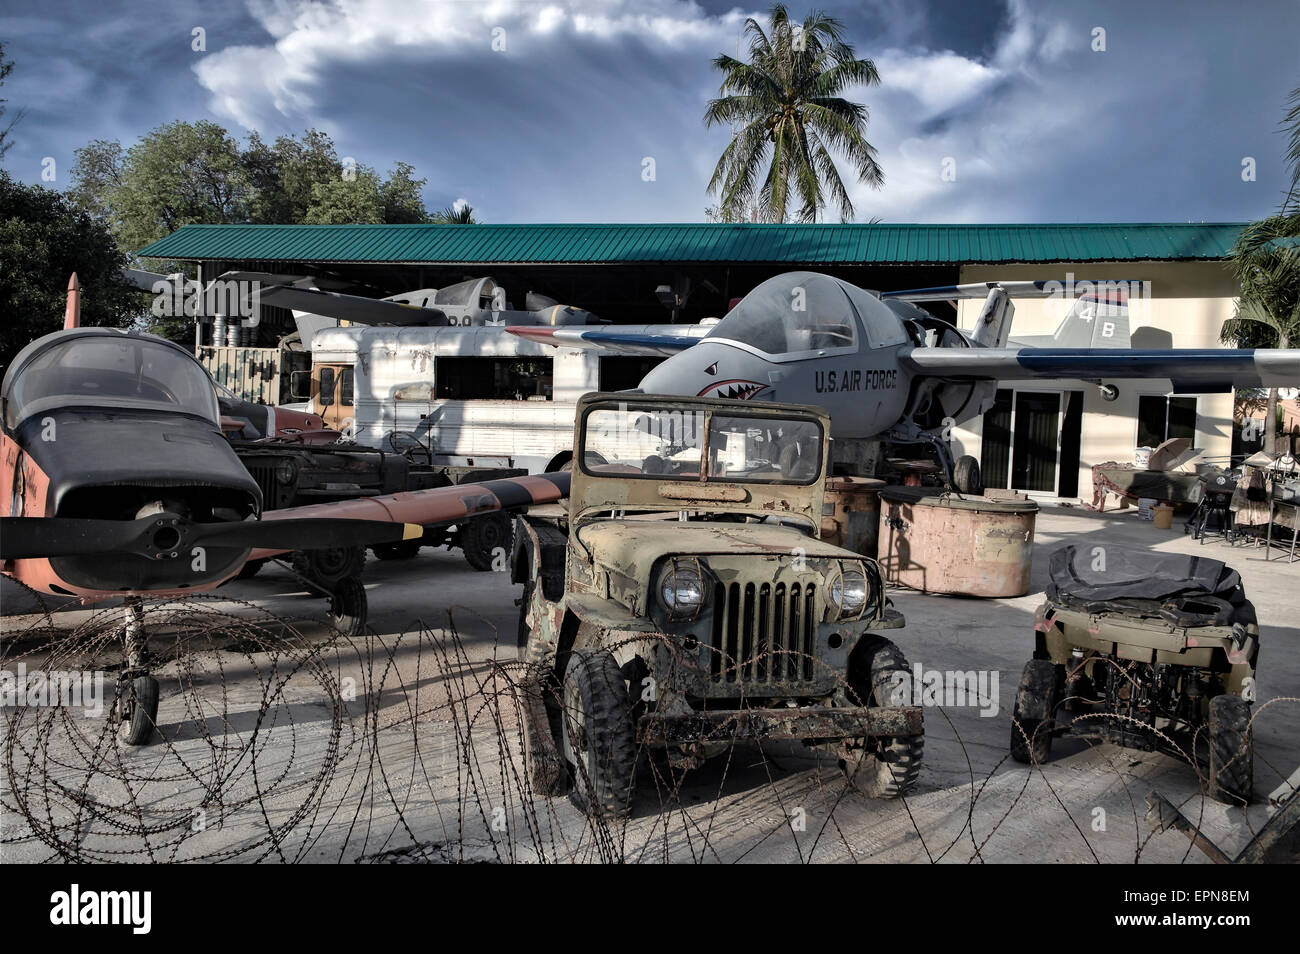 Guerra mondiale 2 veicoli militari americani in vendita. Pattaya  Thailandia, S. E. Asia Foto stock - Alamy